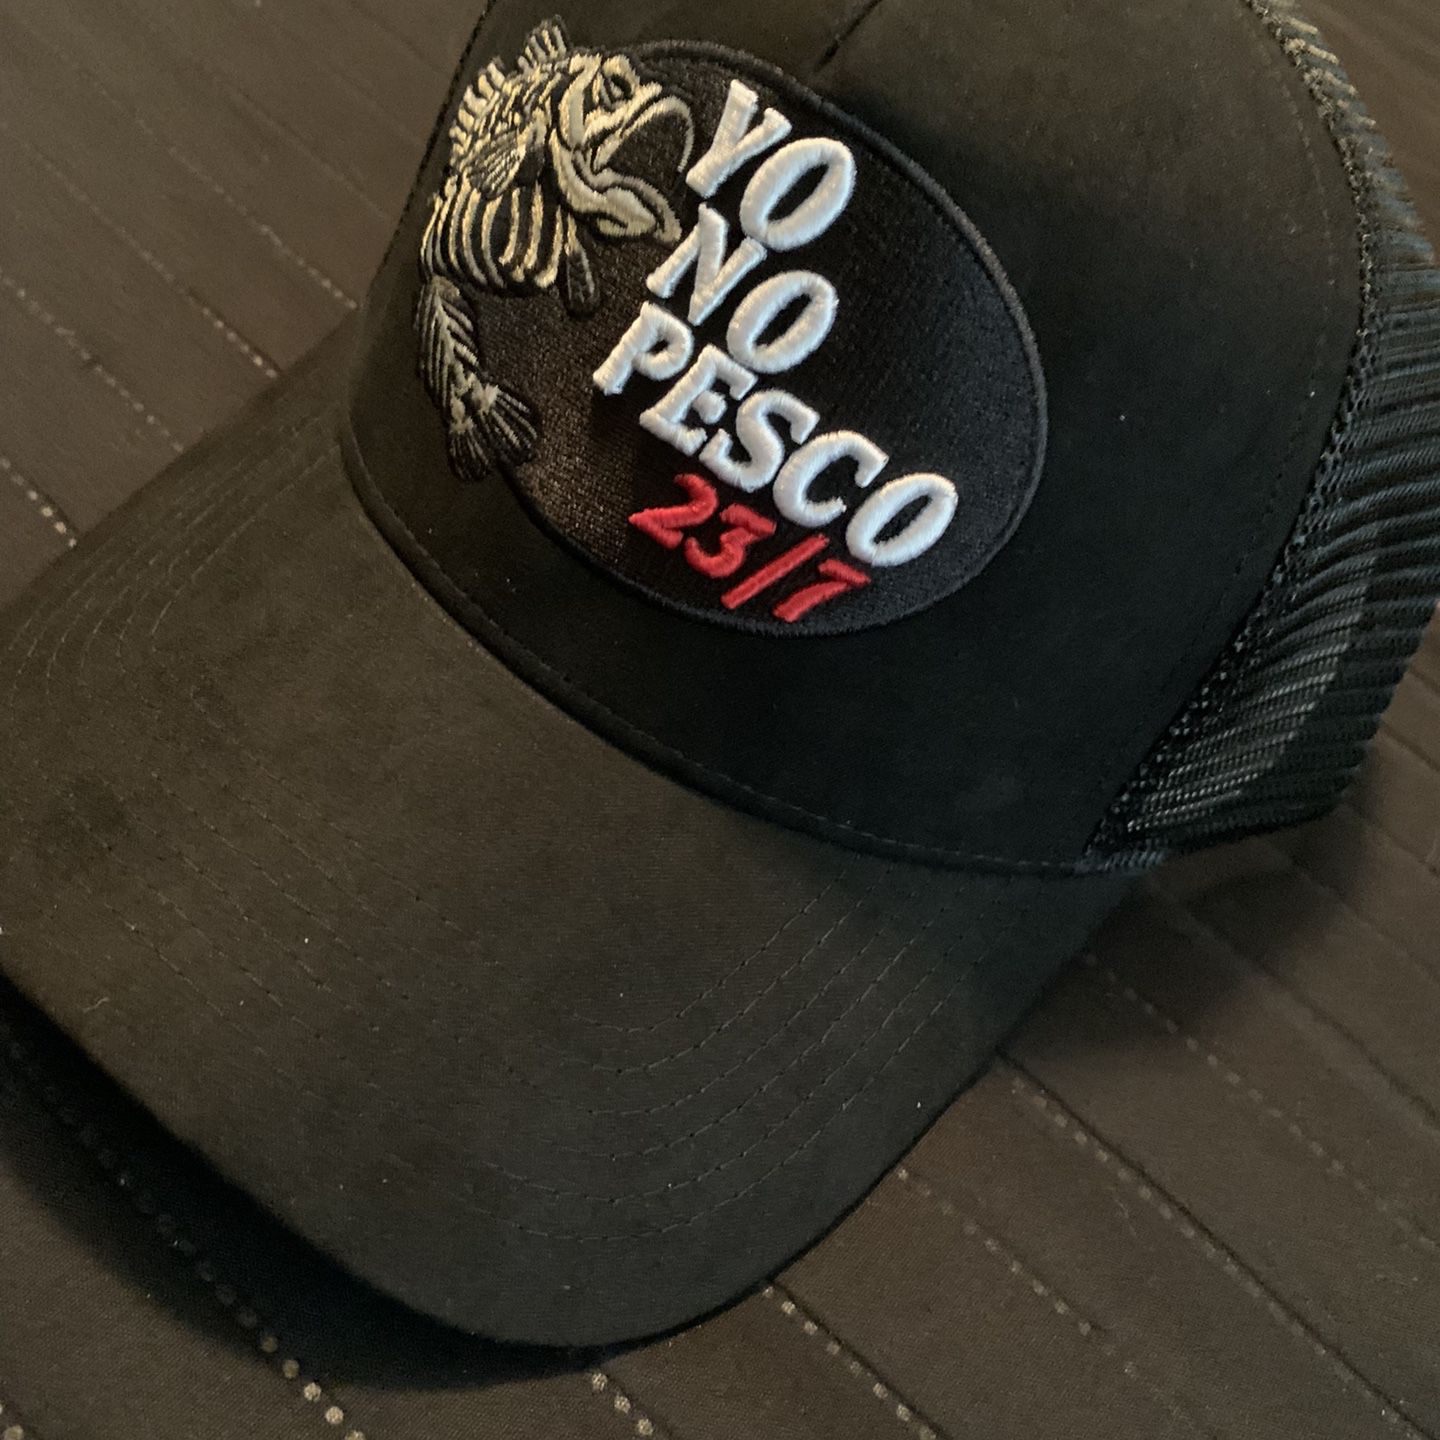 Dandy Hats Yo No Pesco 23/7 for Sale in Coachella, CA - OfferUp